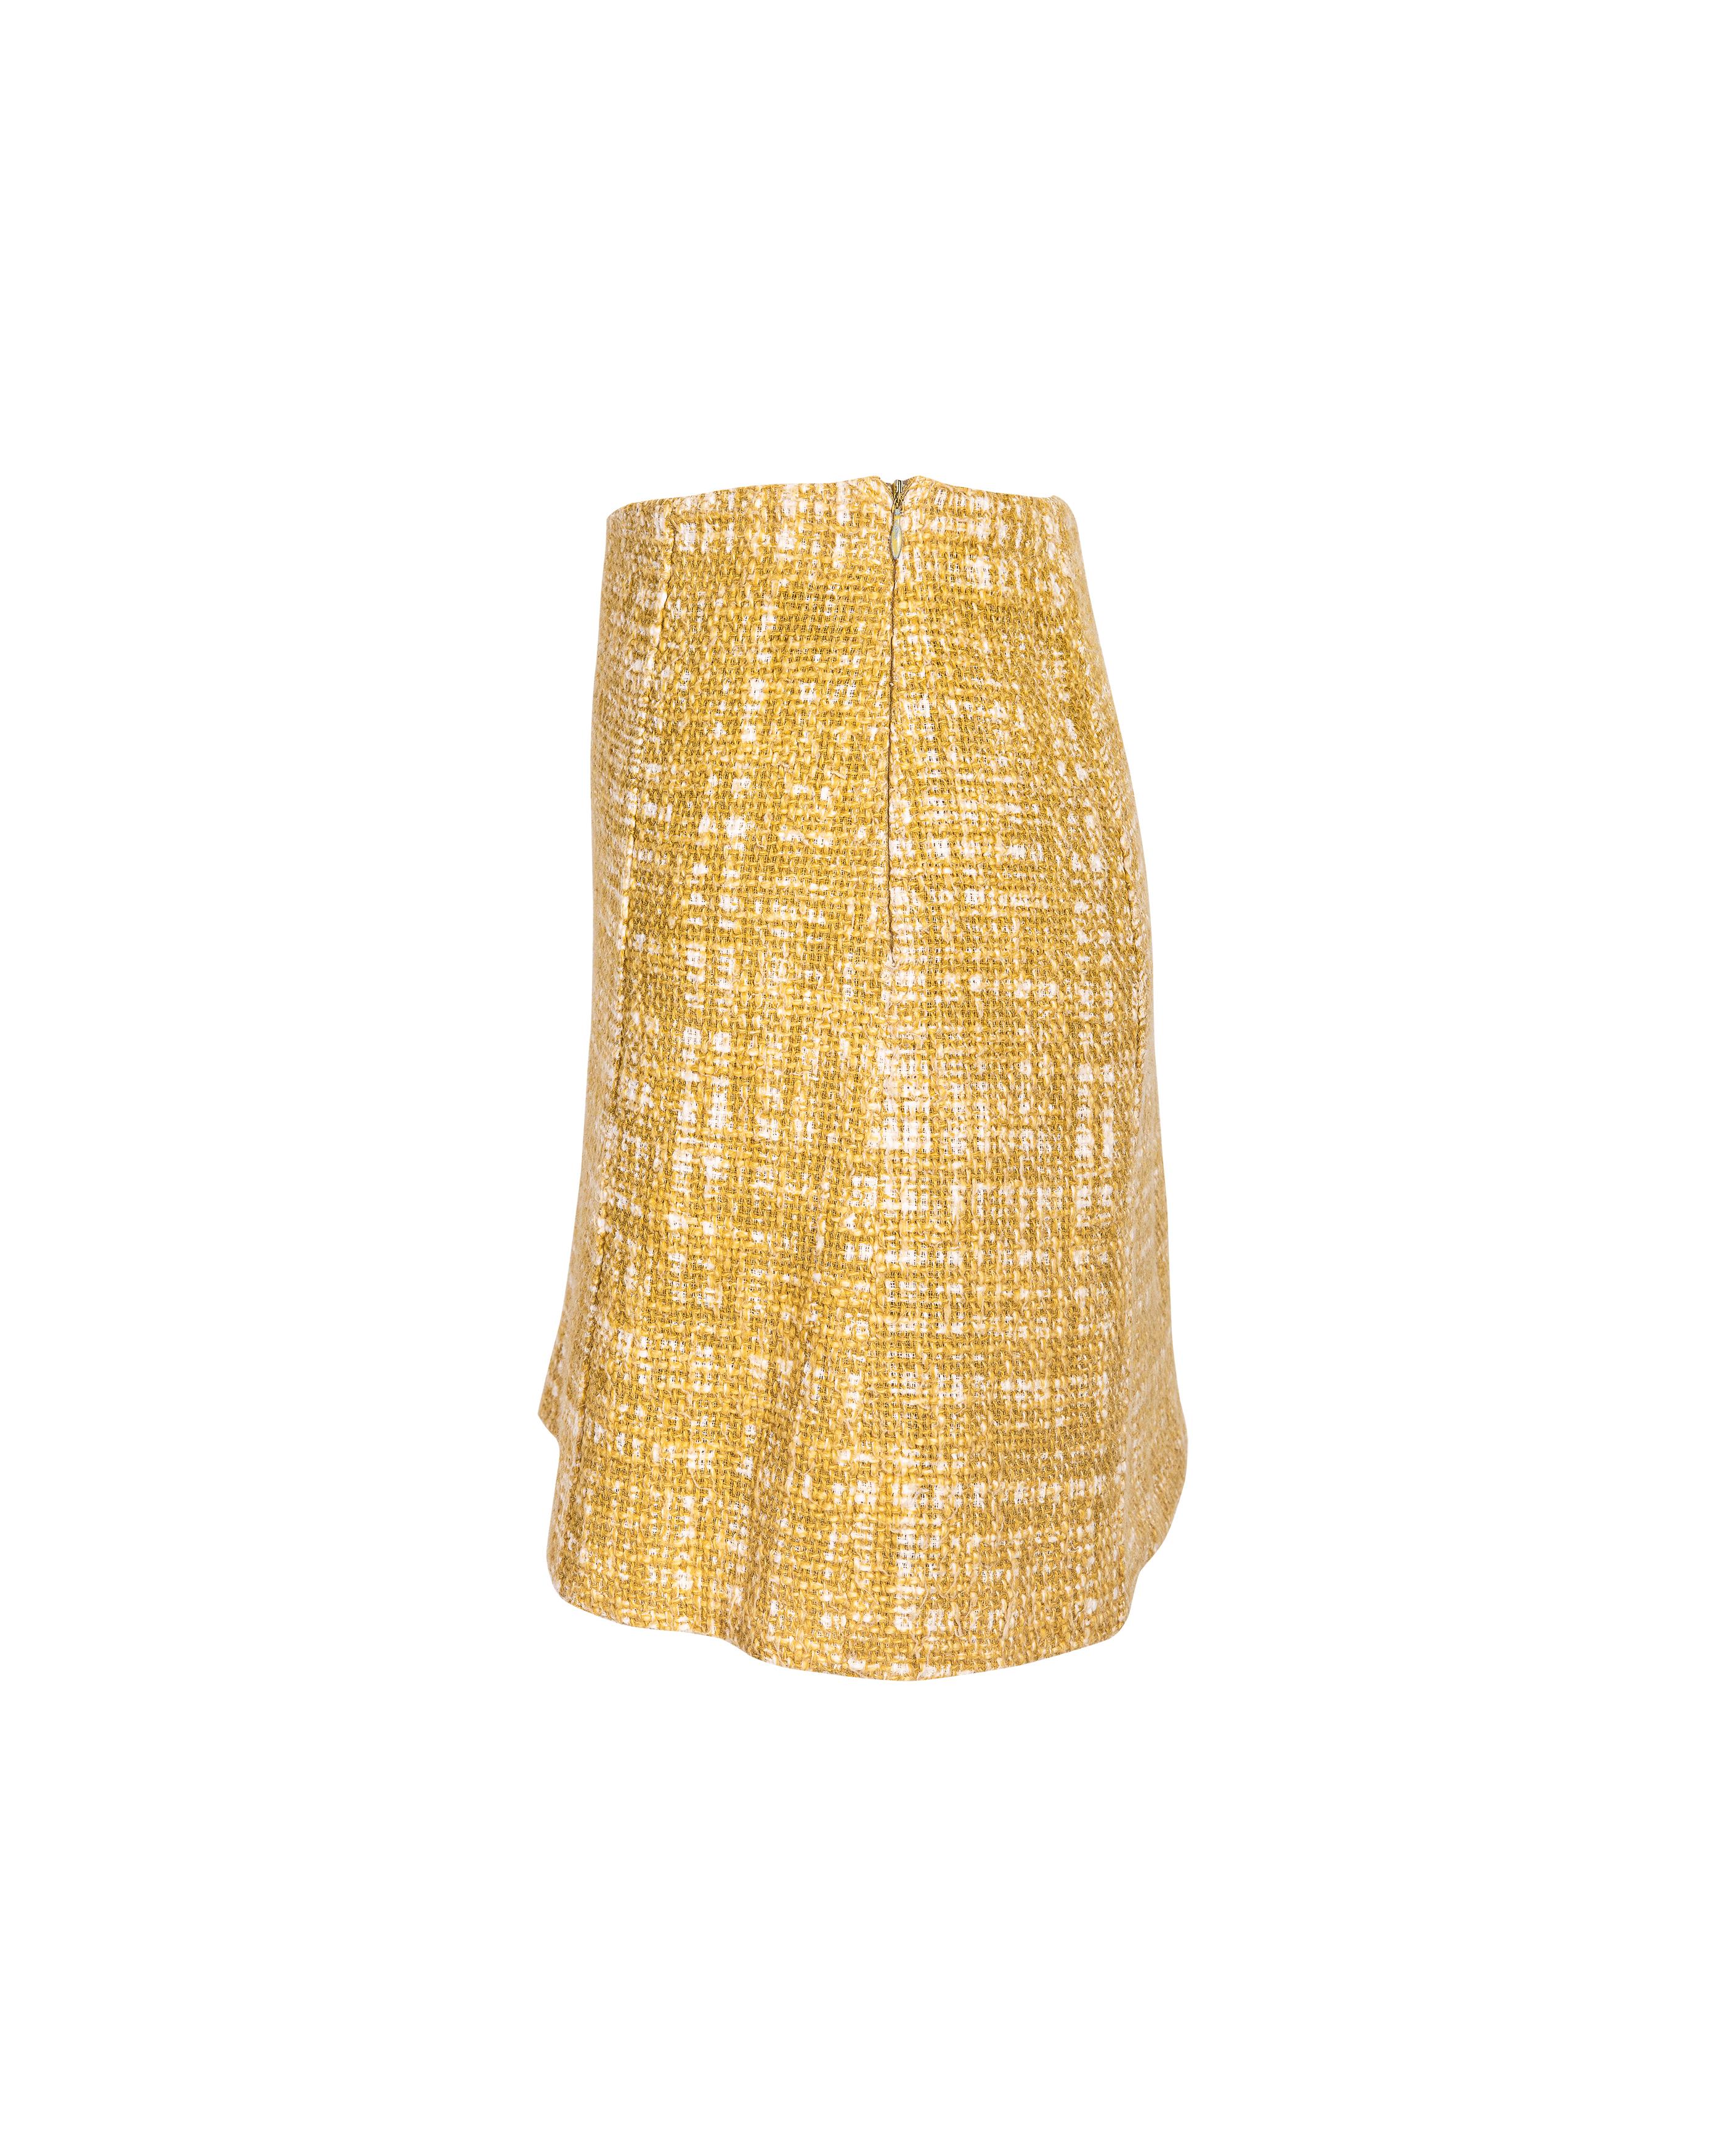 S/S 1996 Prada by Miuccia Prada Yellow-Green Tweed Skirt Set 4